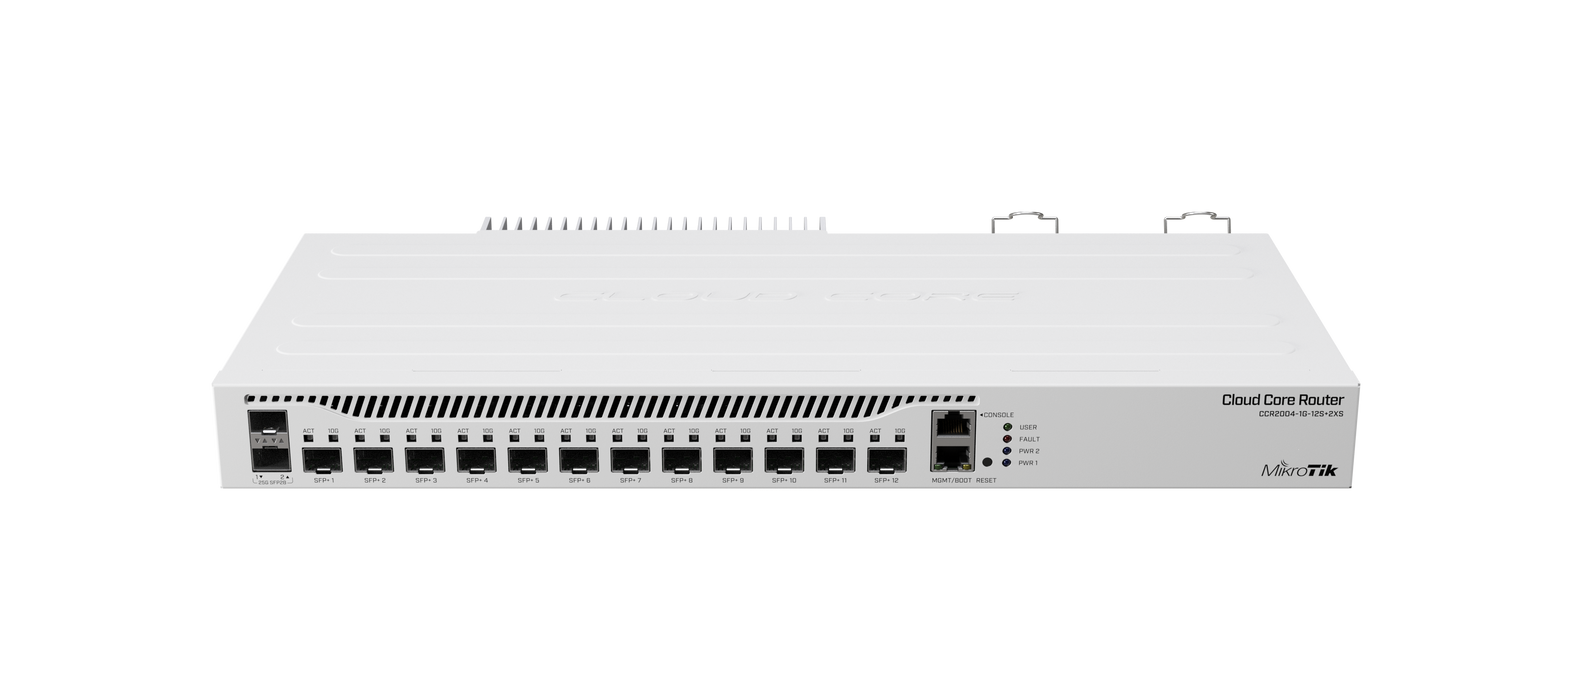 Mikrotik Cloud Core Router 2004-1G-12S+2XS with Annapurna Alpine AL32400 CPU (4-cores, 1.7GHz per core), 4GB RAM, 1x GLAN, 12x 10G SFP+ cages, 2x 25G SFP28 cages, RouterOS L6, 1U rackmount case, Dual PSU.